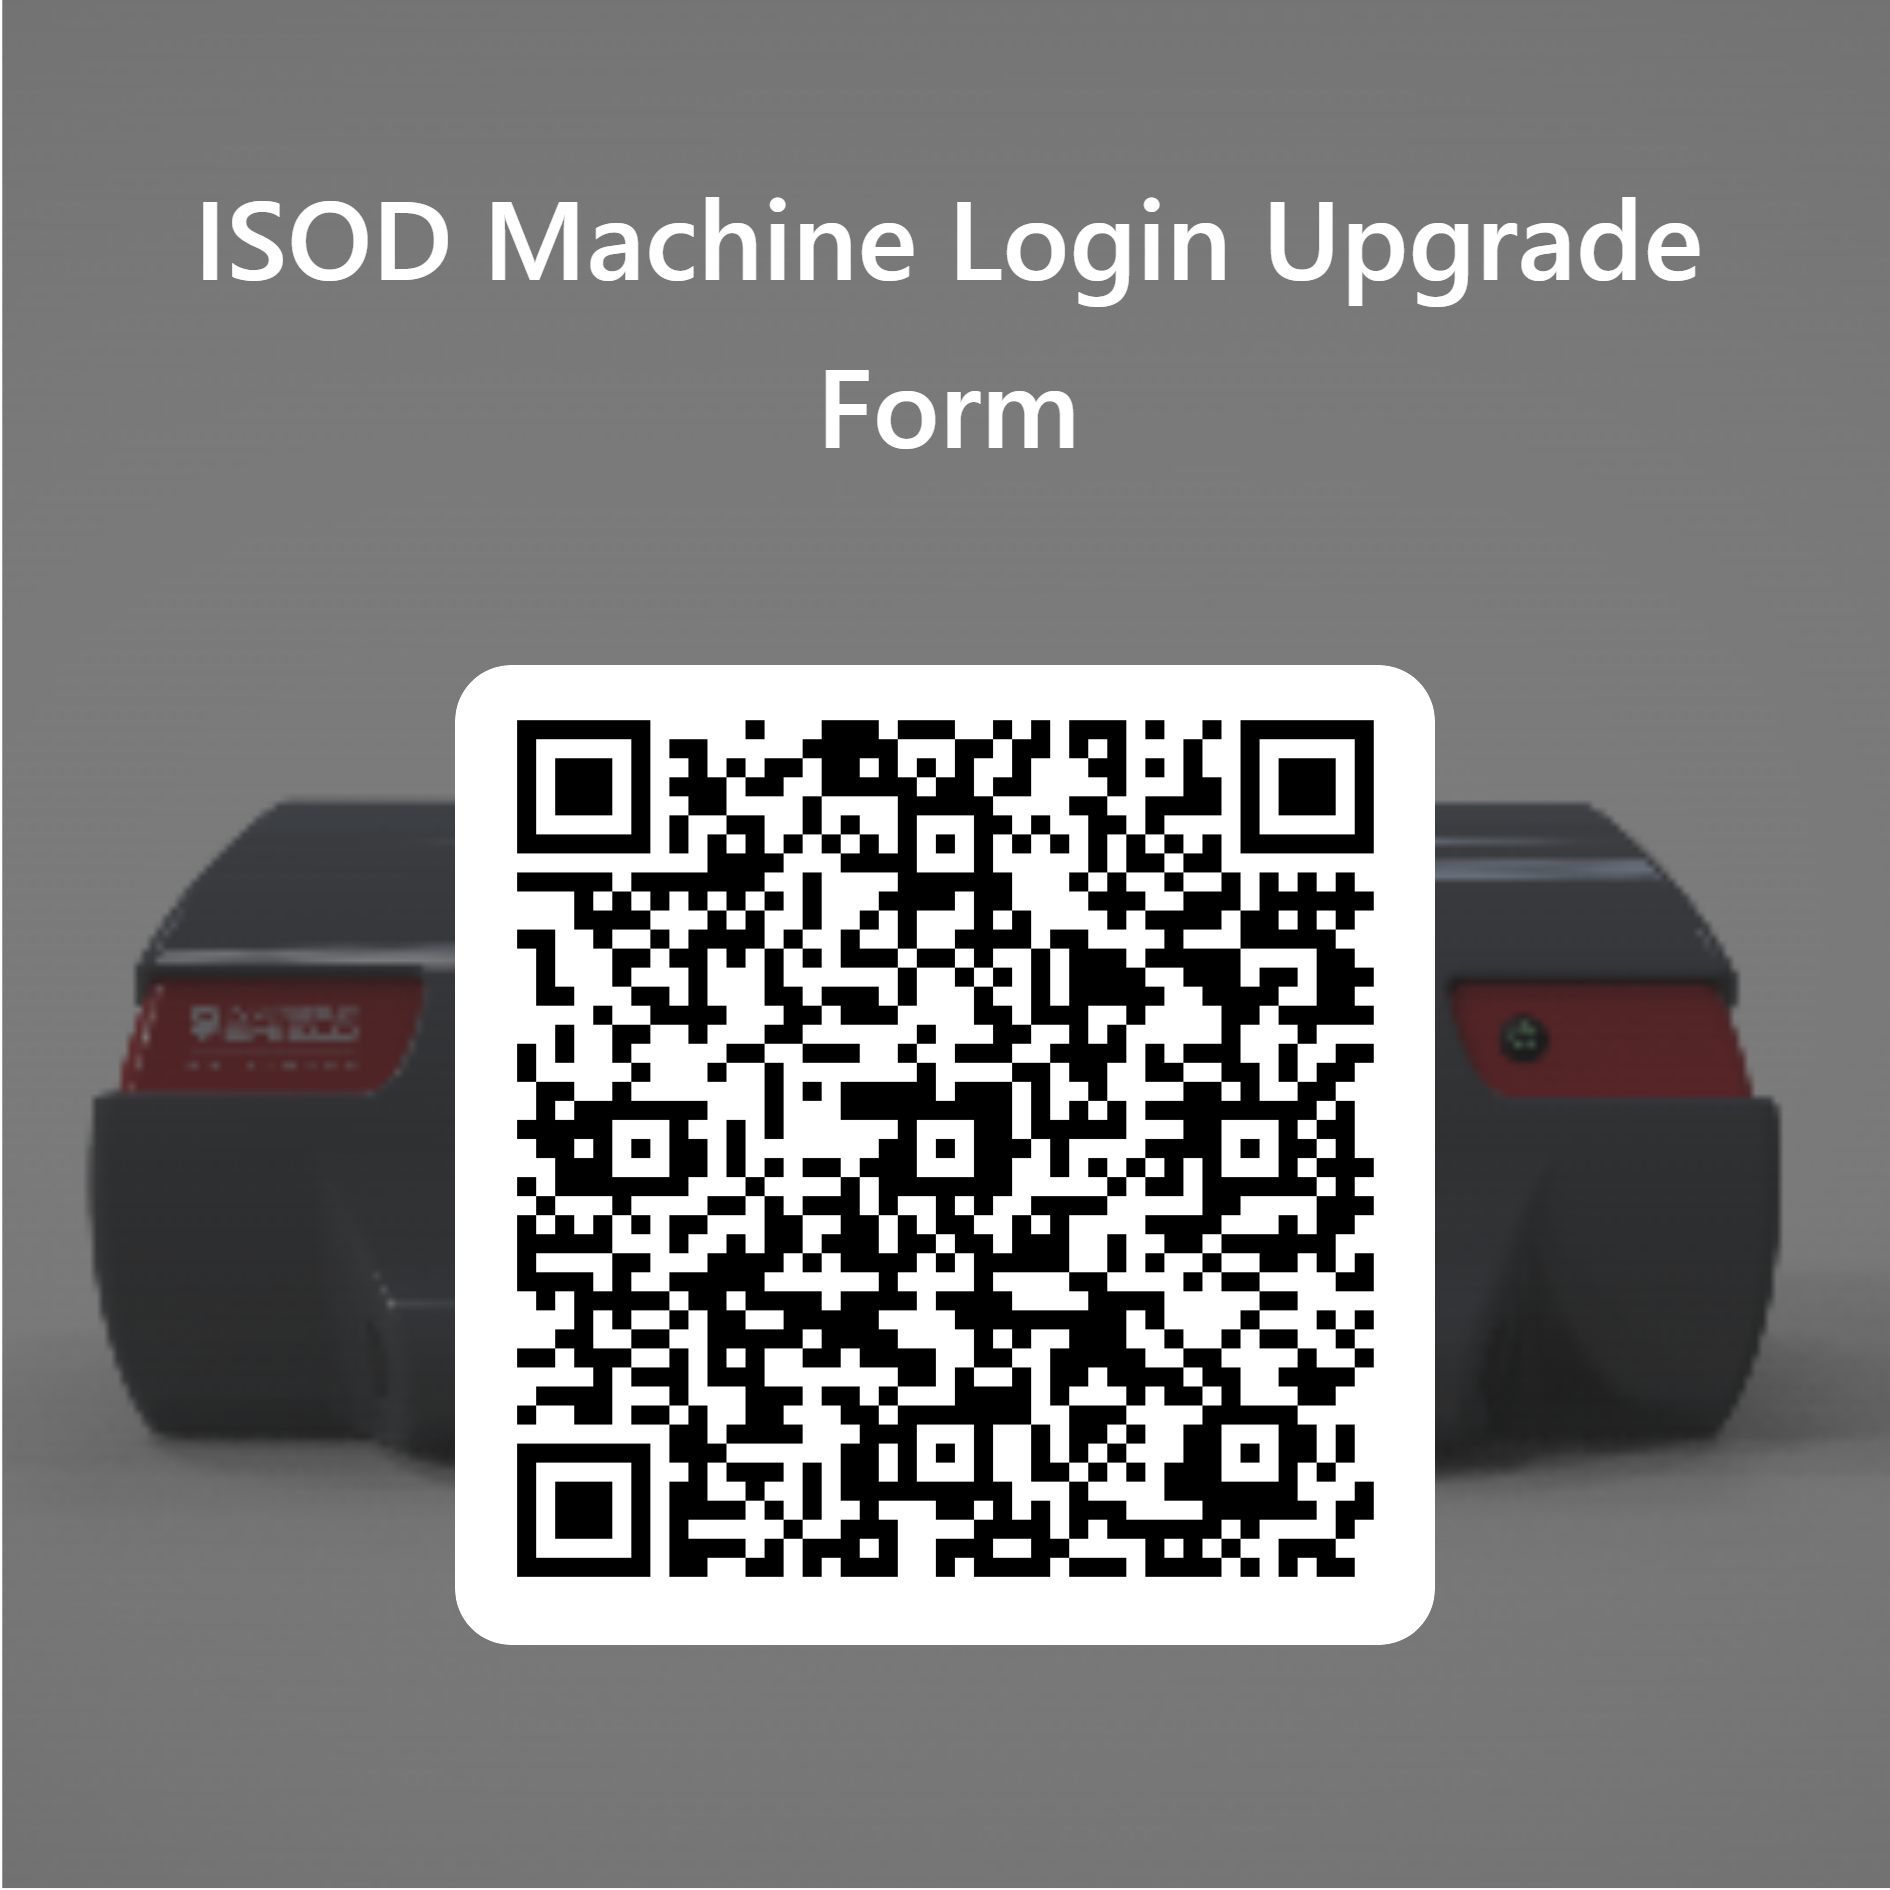 ISOD Machine Login Upgrade Form